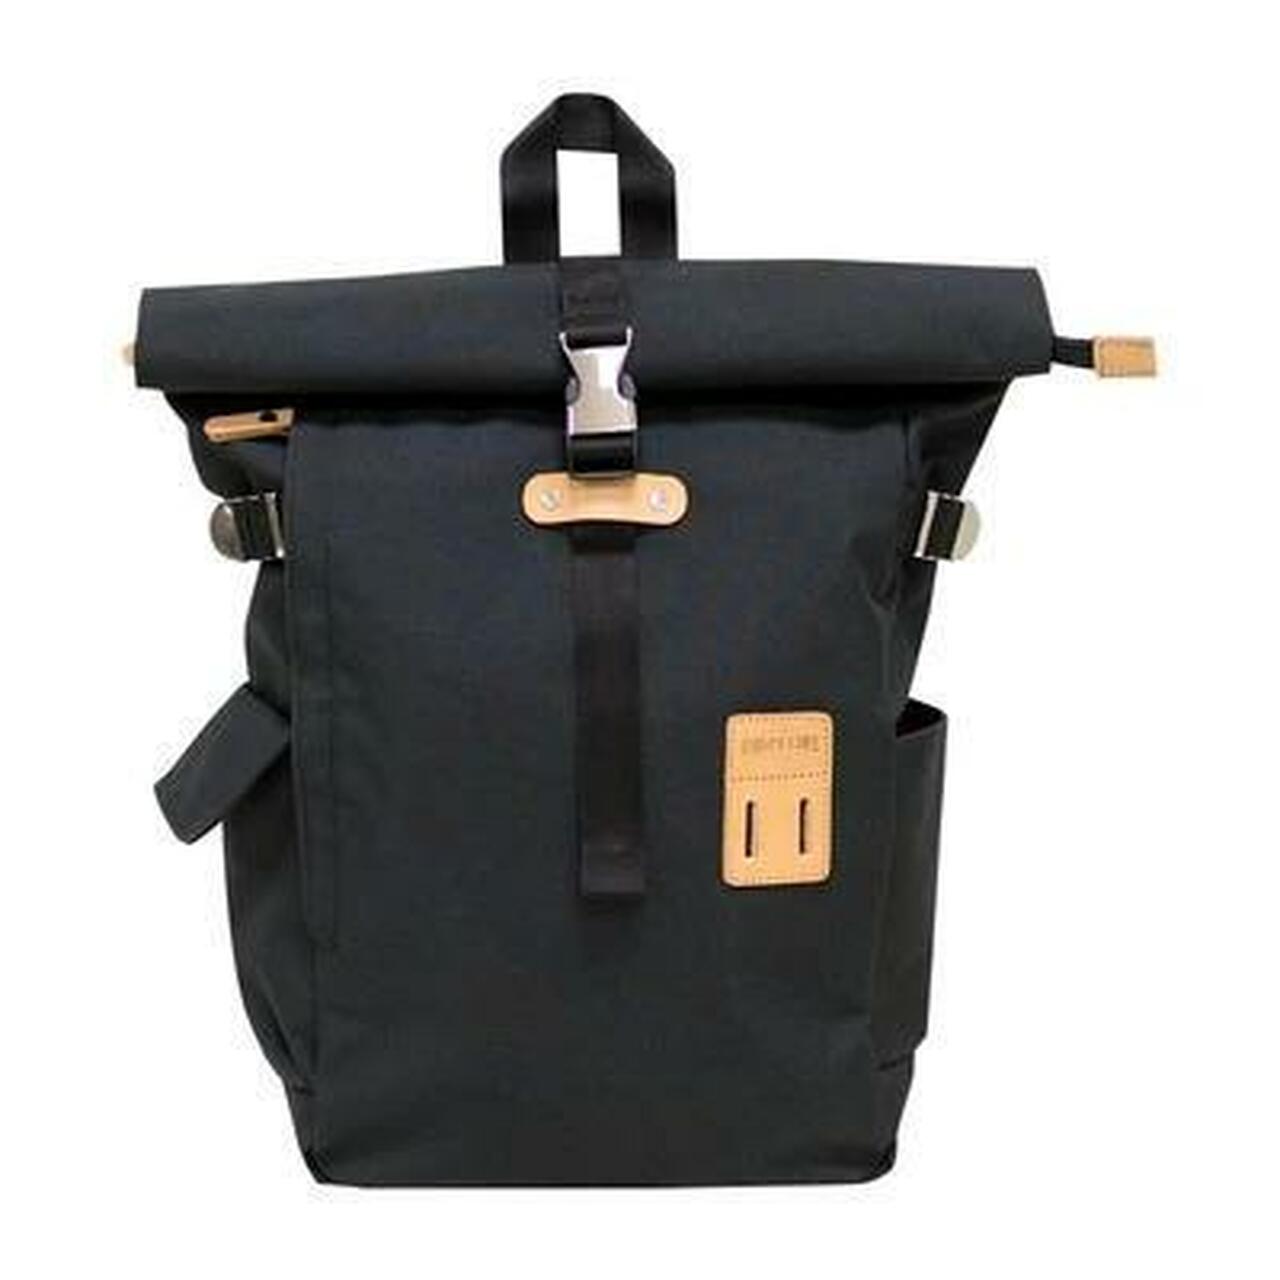 Rolltop Backpack Plus - Valley Variety